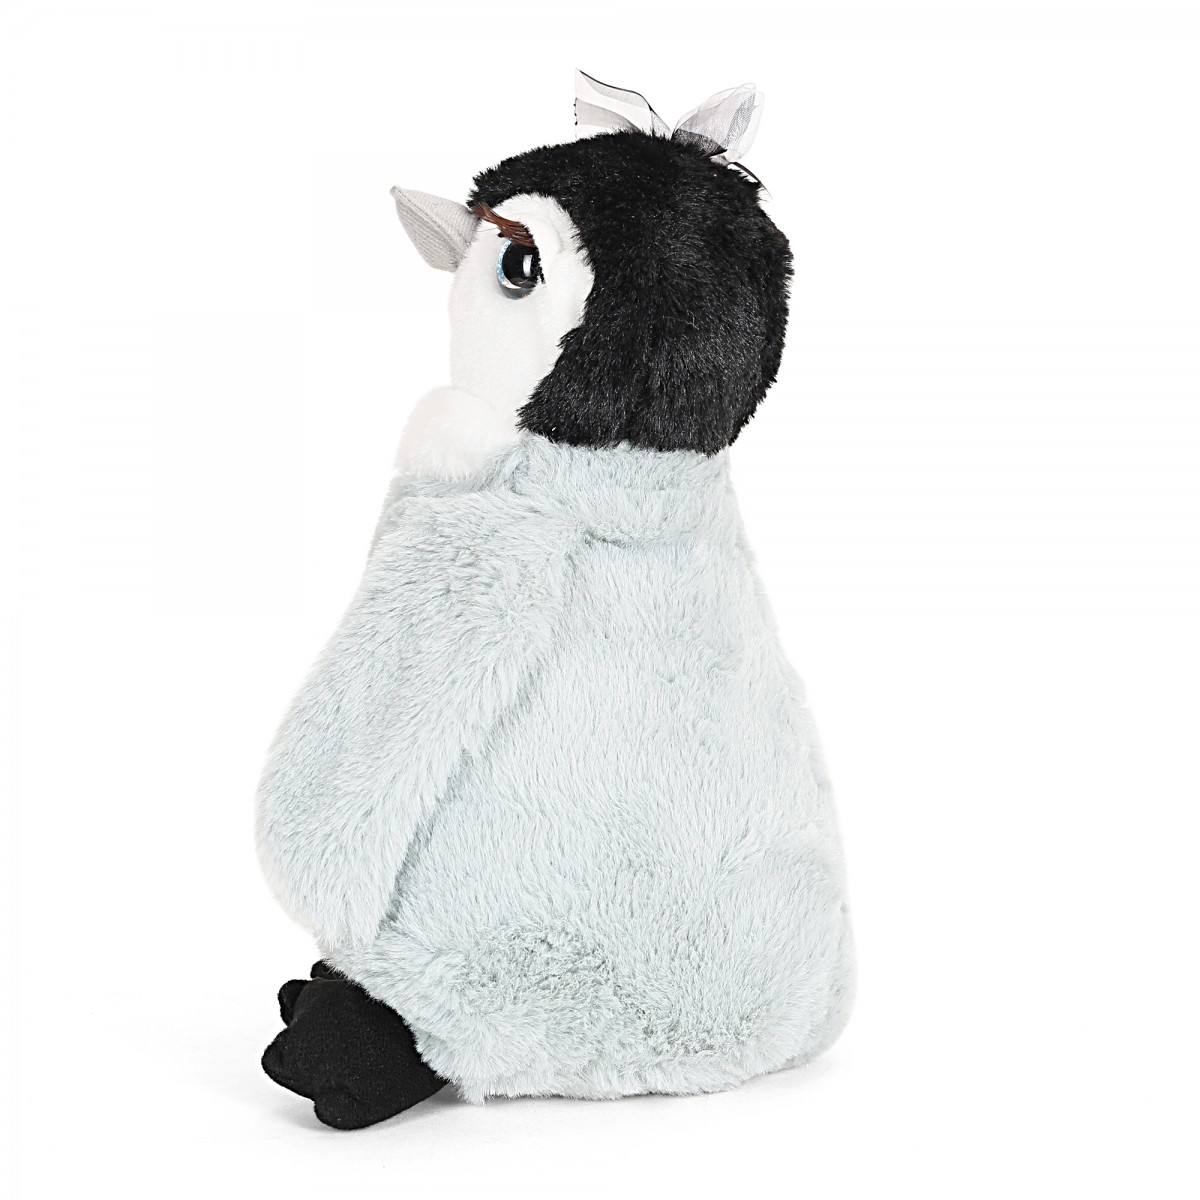 Fuzzbuzz Penguin Chick, Soft Poys for Kids, 27cm, Green